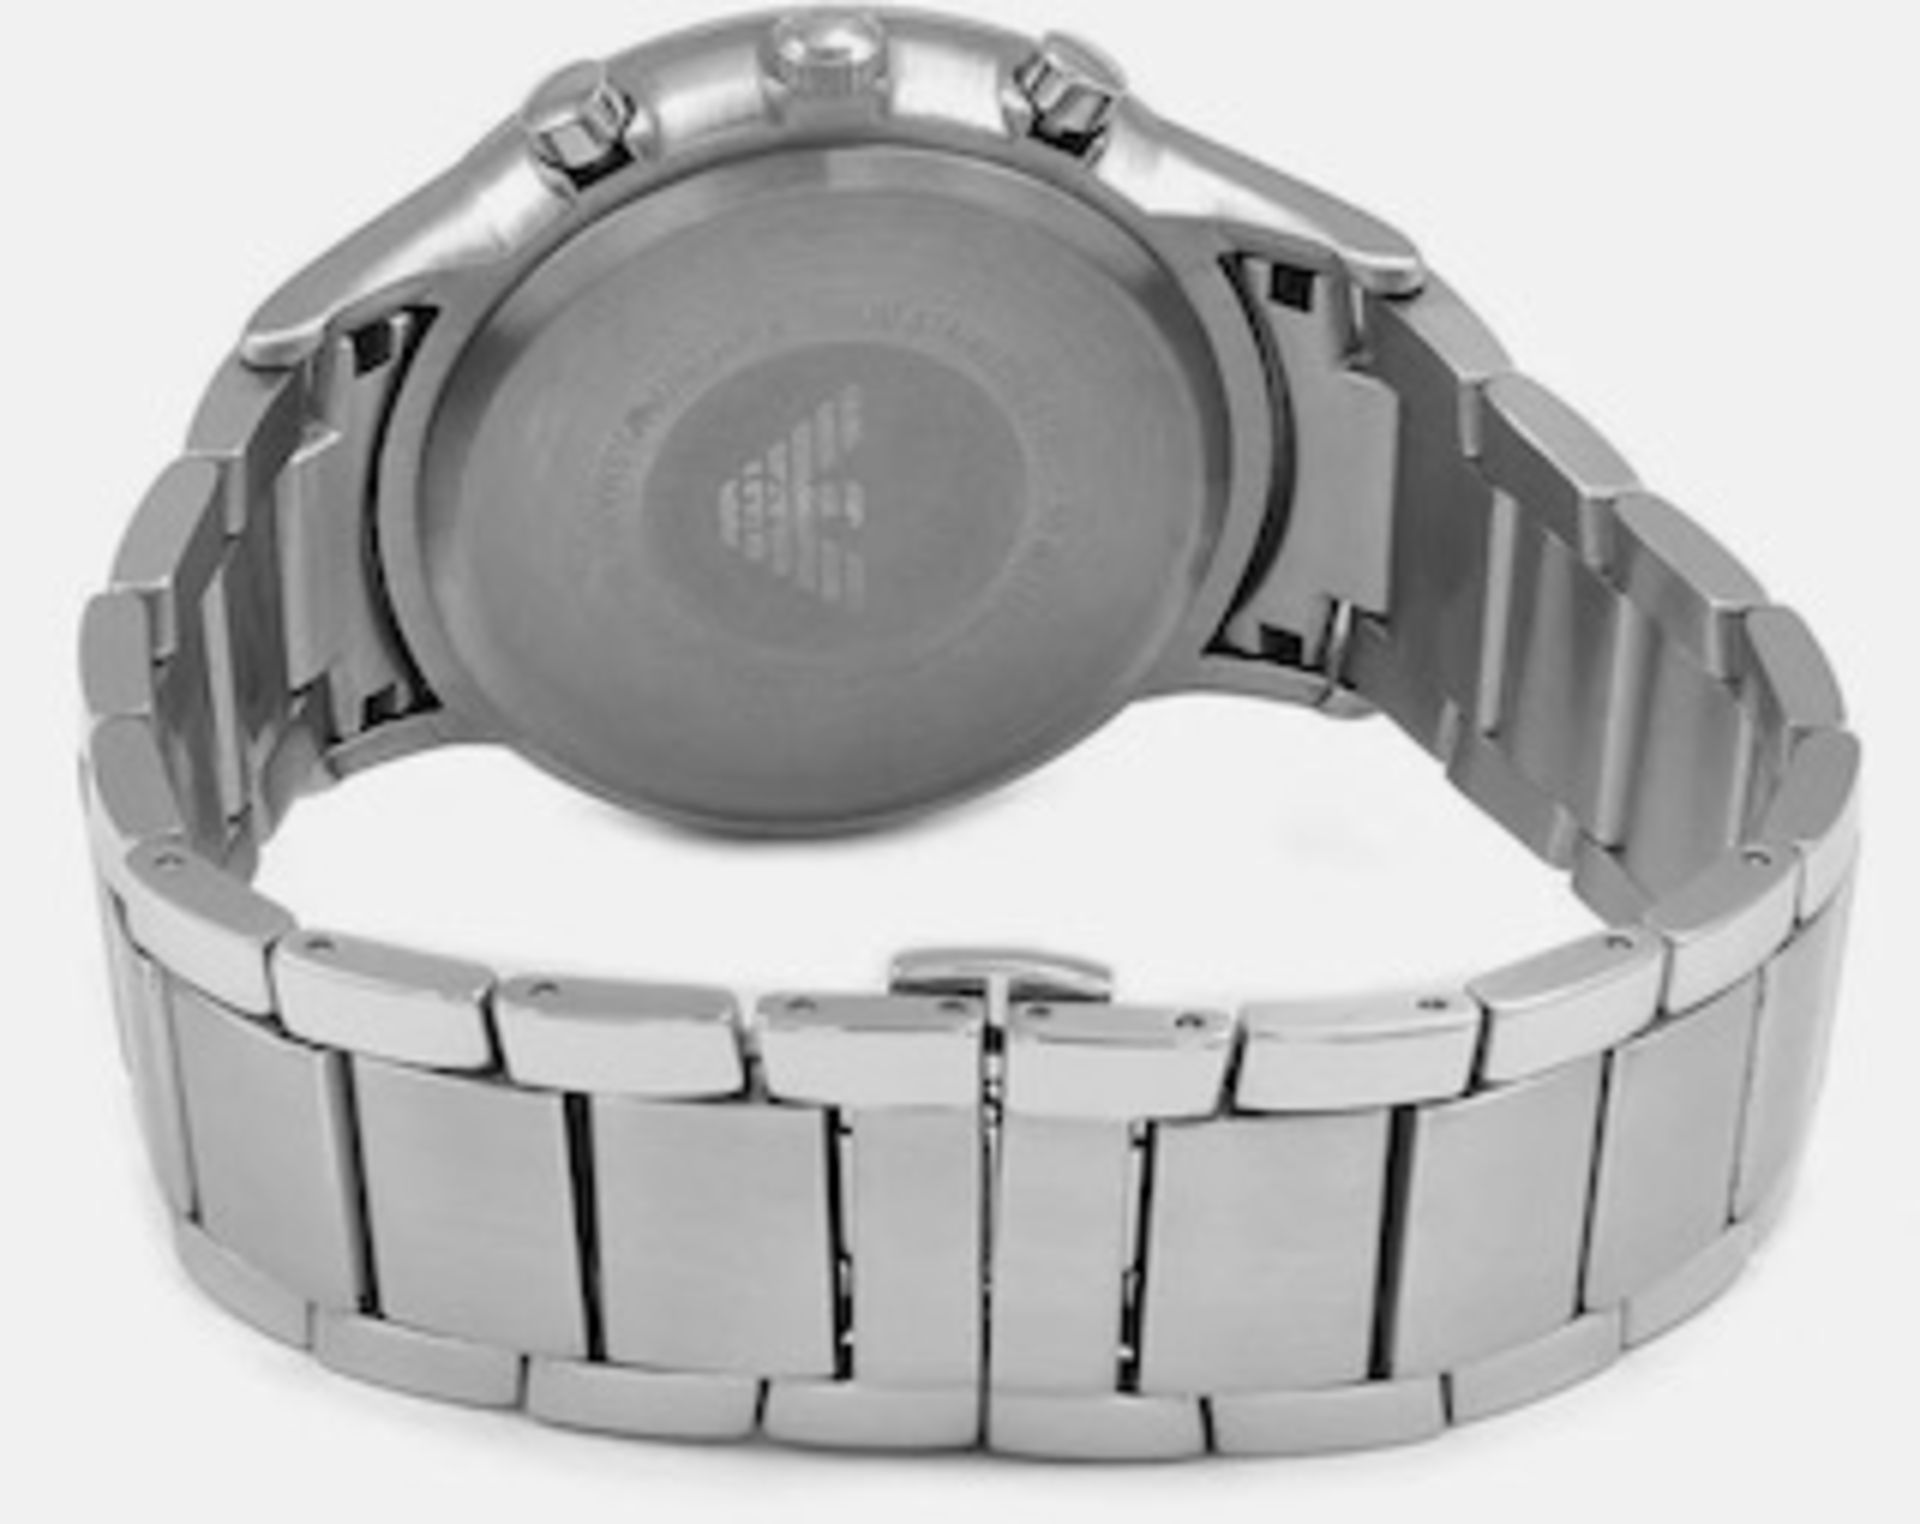 Emporio Armani AR2448 Men's Blue Dial Silver Bracelet Chronograph Watch - Image 6 of 7